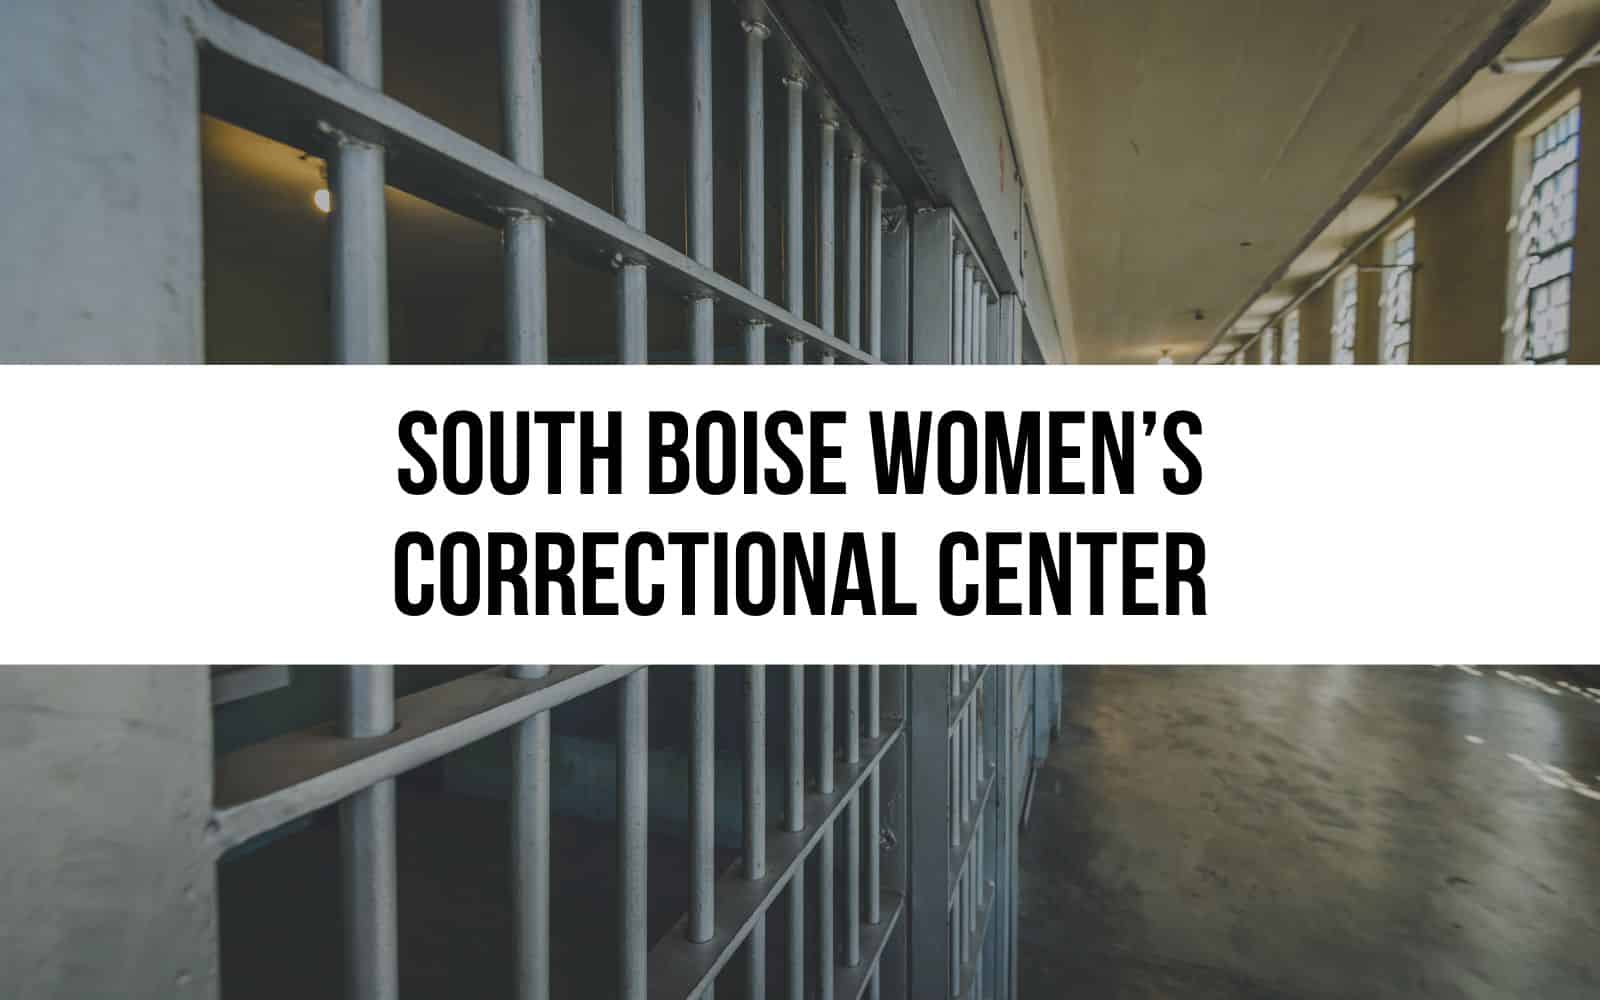 South Boise Women’s Correctional Center